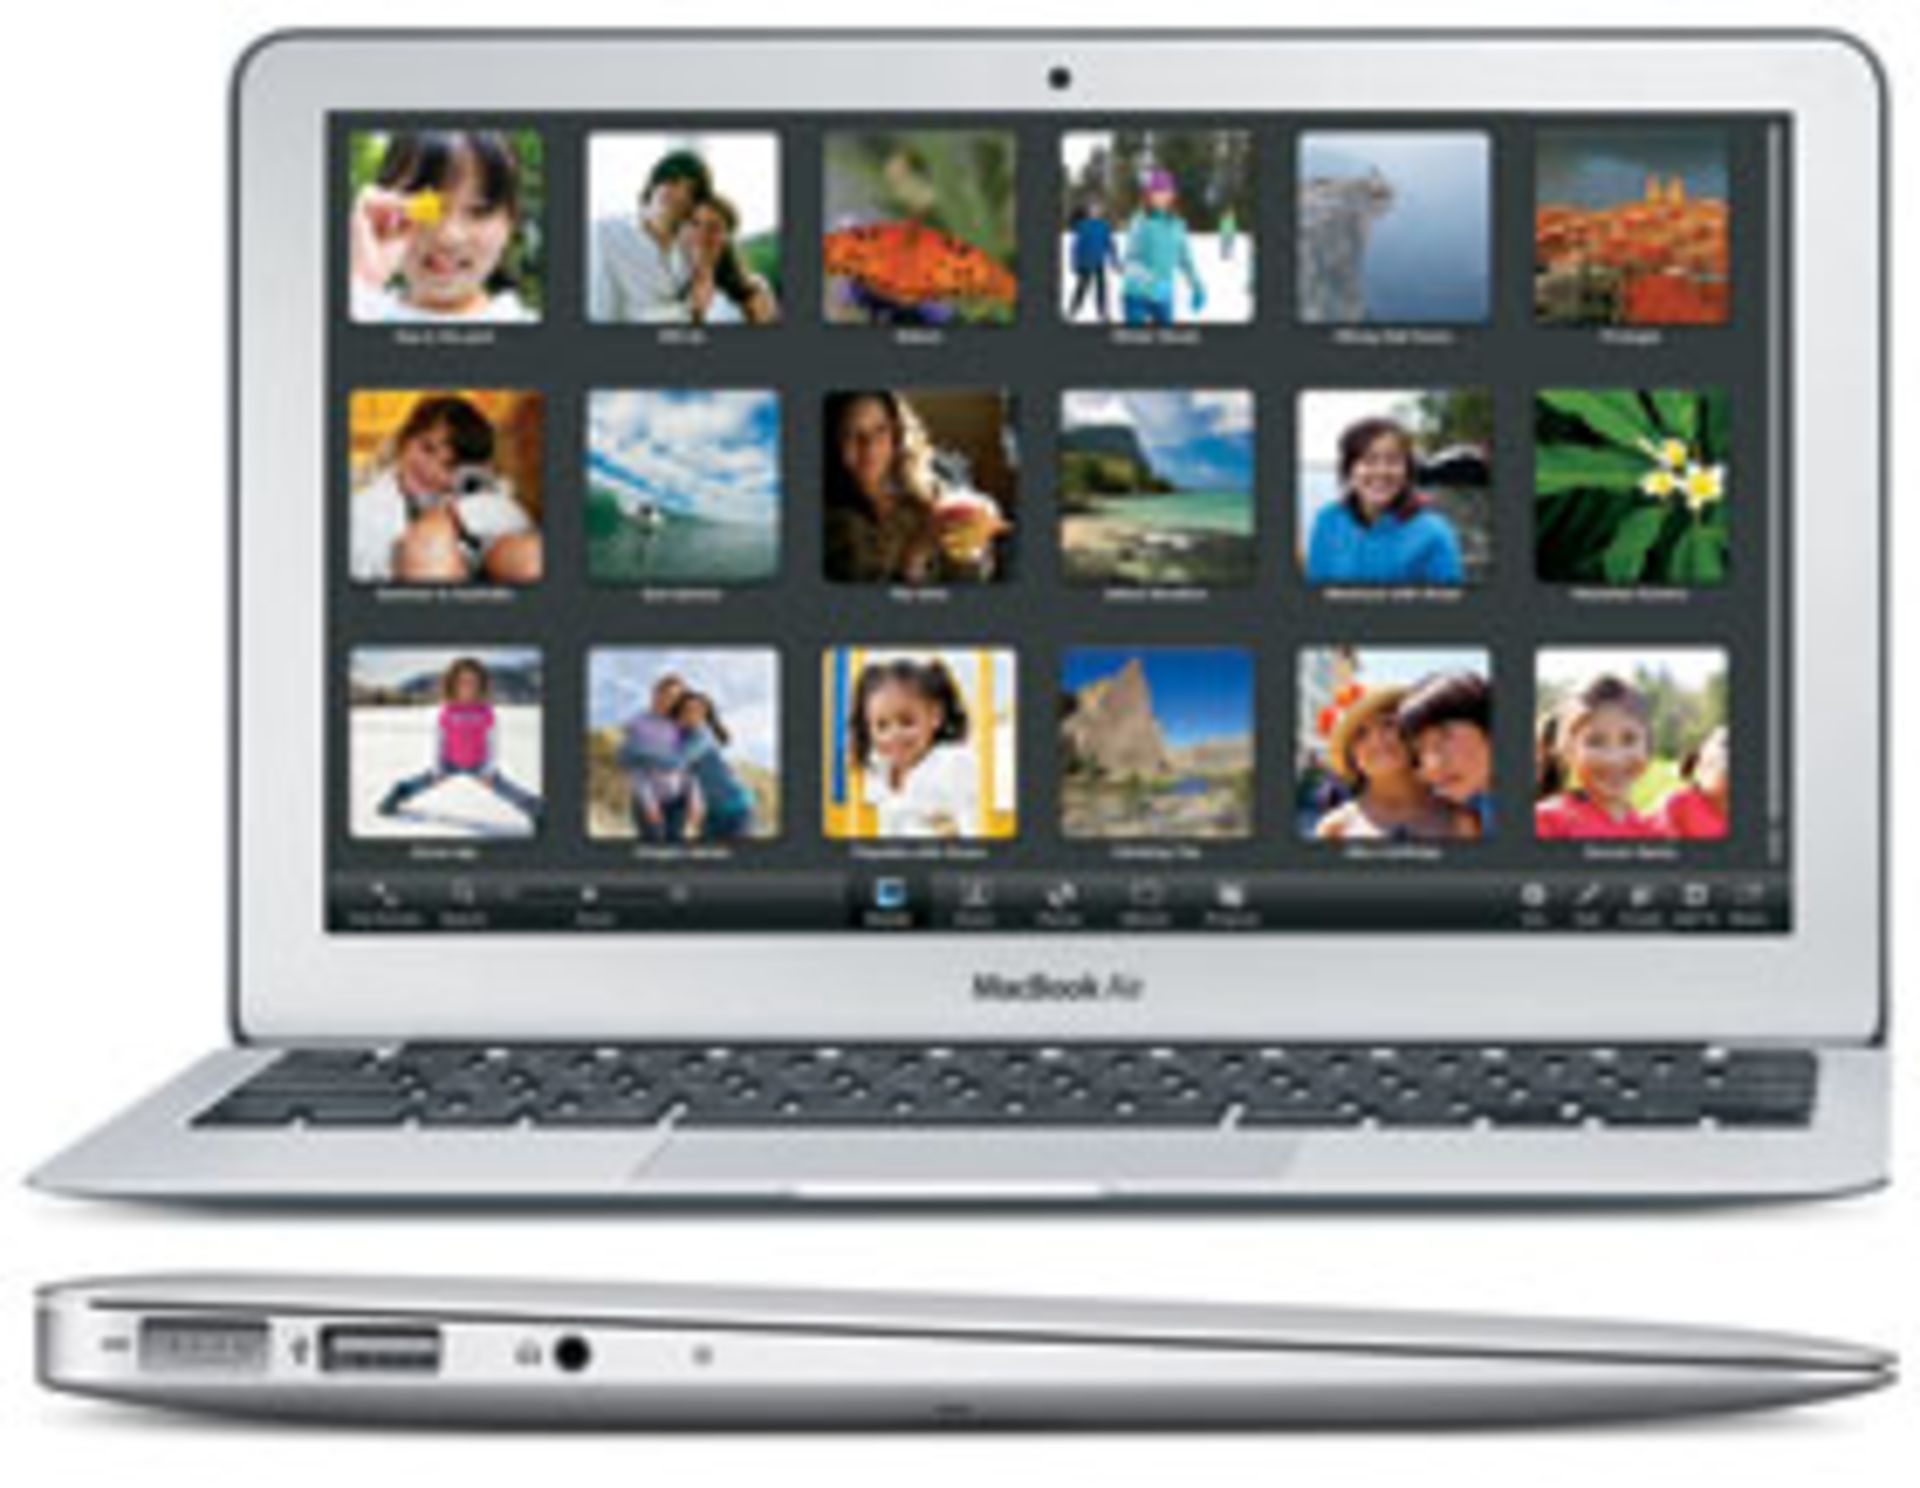 V Grade B Macbook Air 11.6 Inch Core 2 Duo - 64GB SSD - A1370